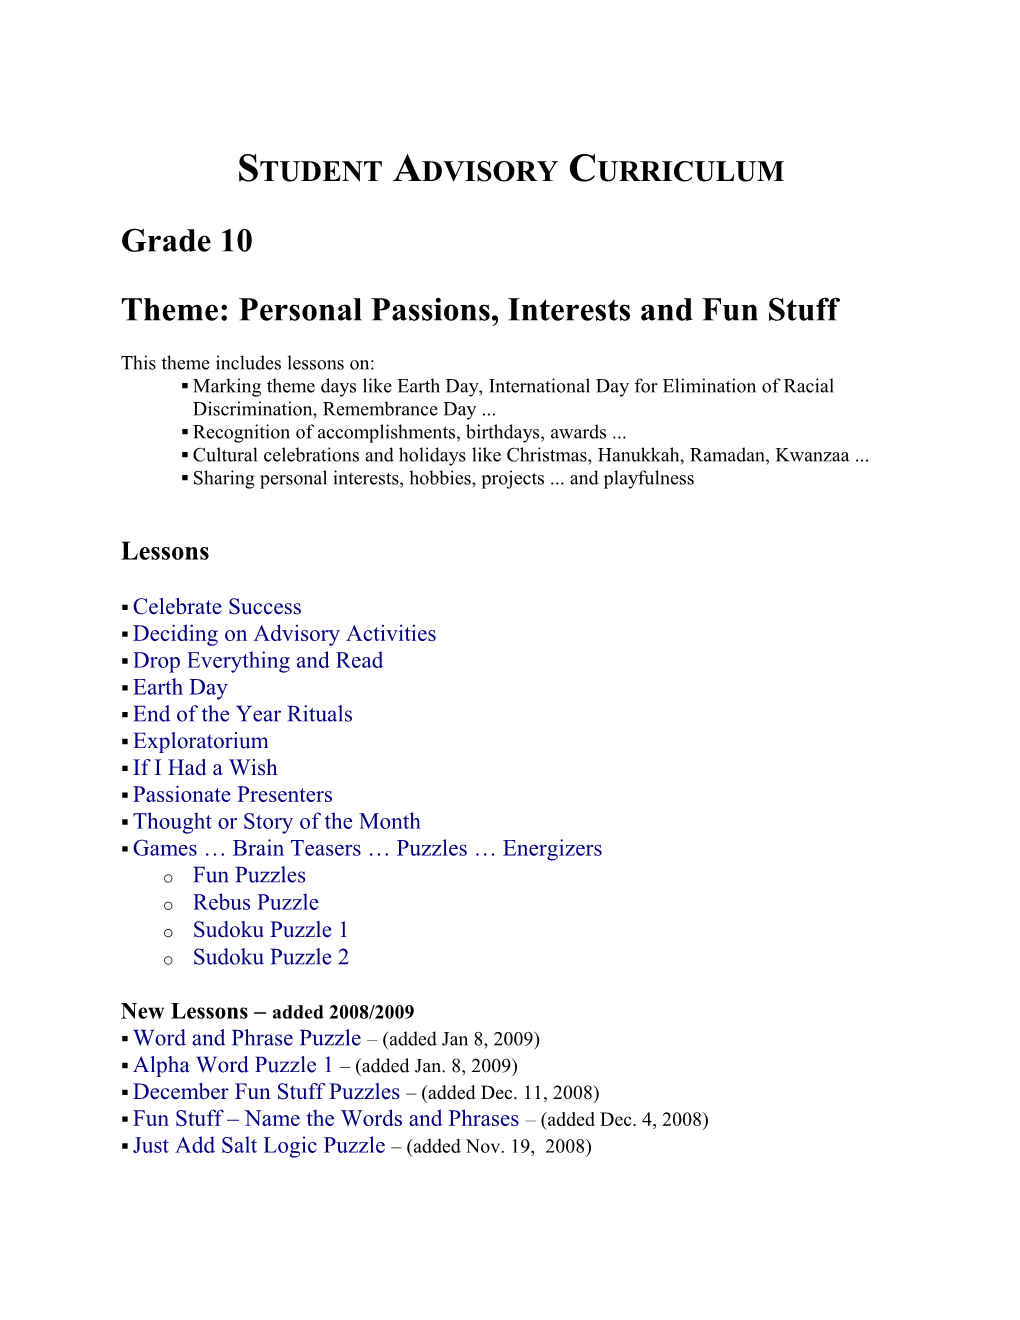 Student Advisory Curriculum s1